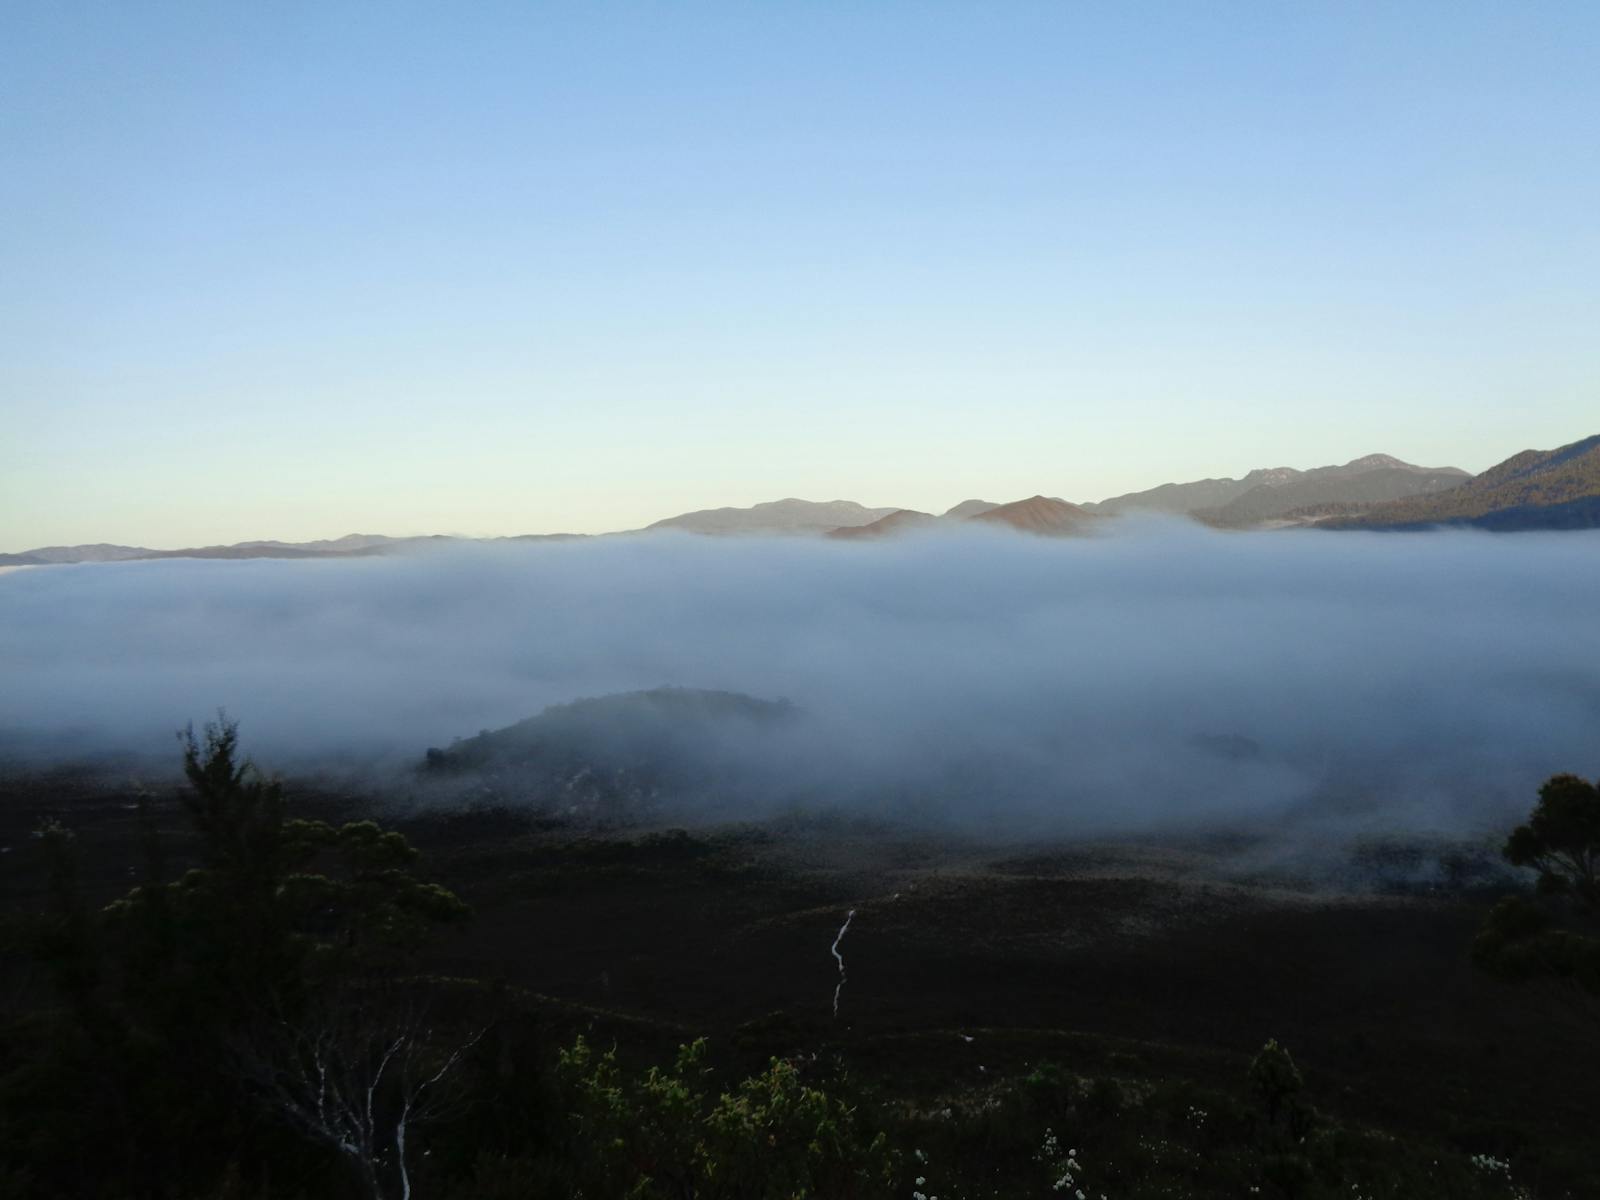 View near the summit of The Ironbound Range